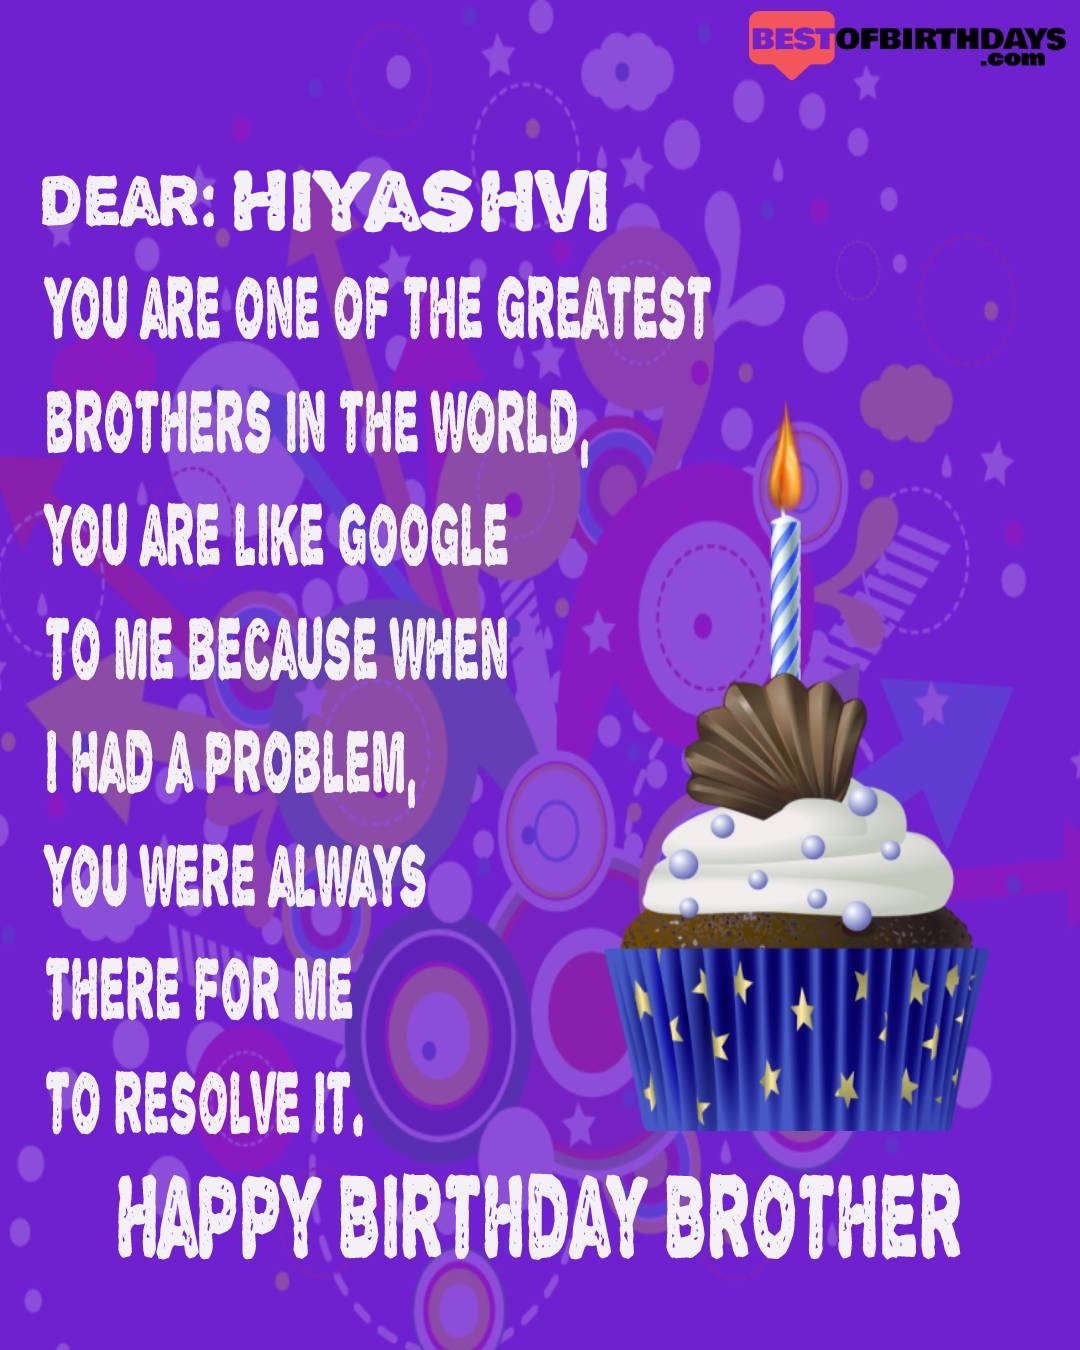 Happy birthday hiyashvi bhai brother bro